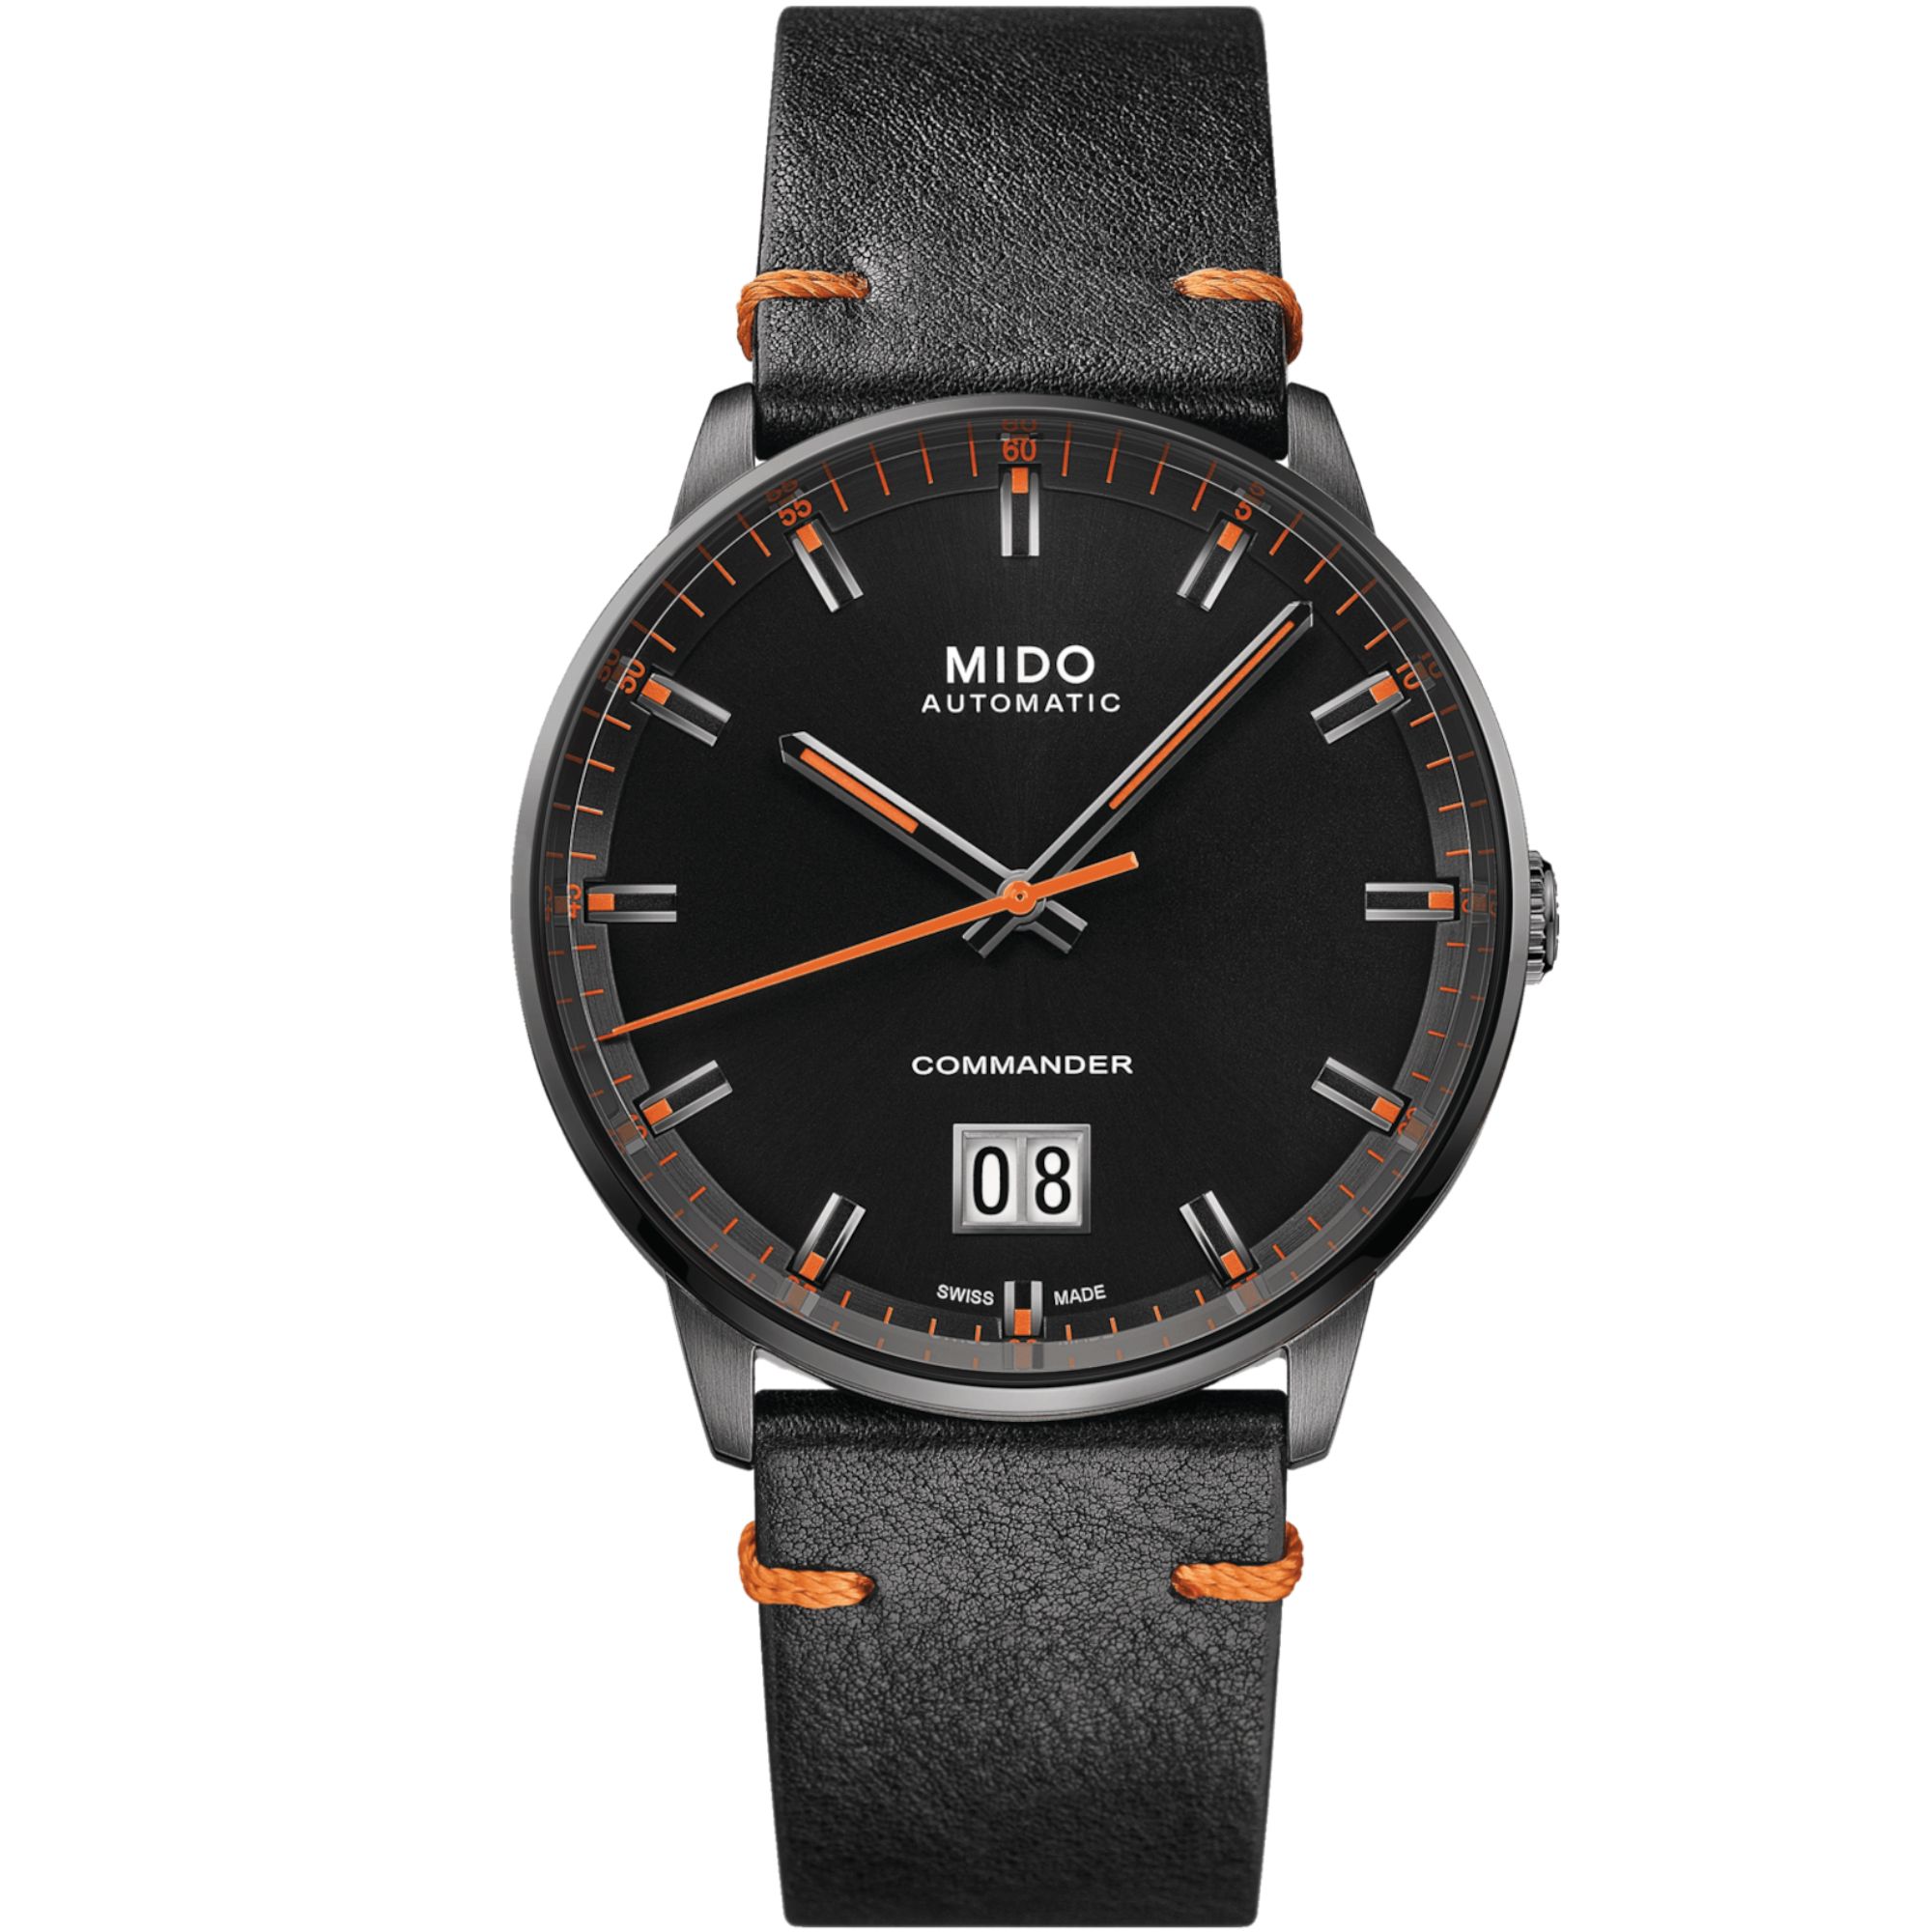 Relógio Mido Comander Big Date Automático Preto M021.626.36.051.01